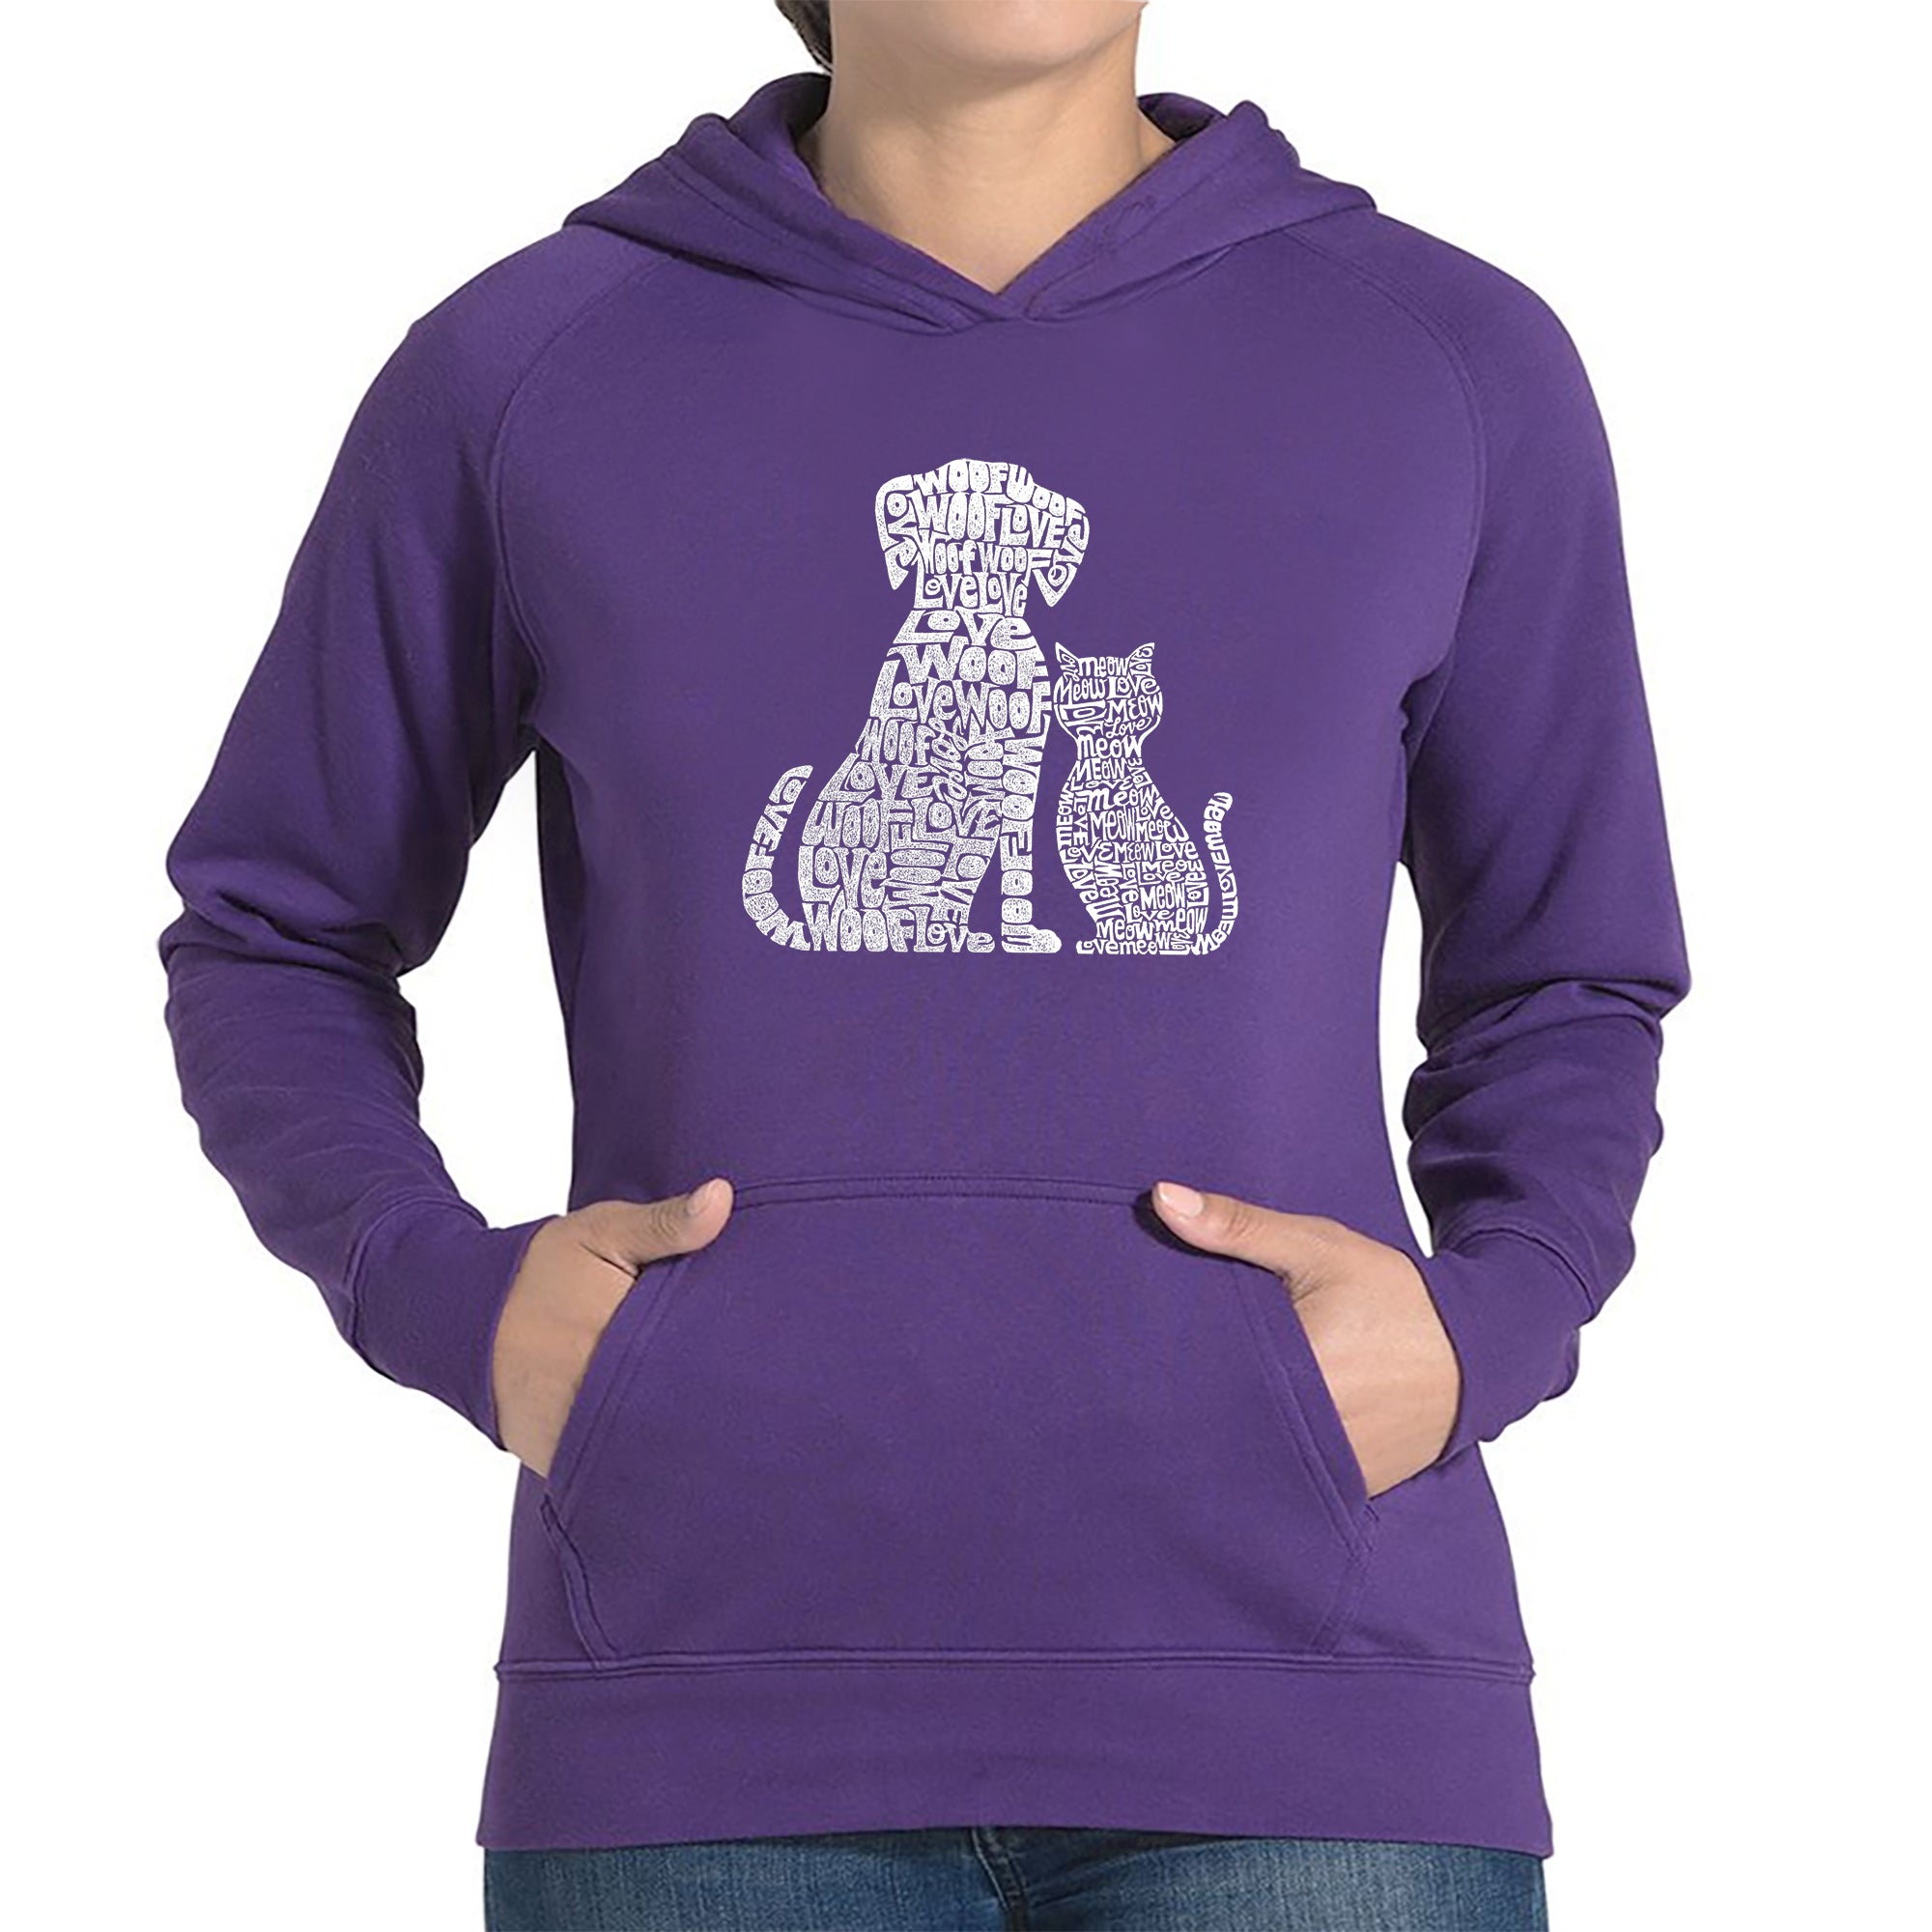 Dogs And Cats - Women's Word Art Hooded Sweatshirt - Purple - XXX-Large